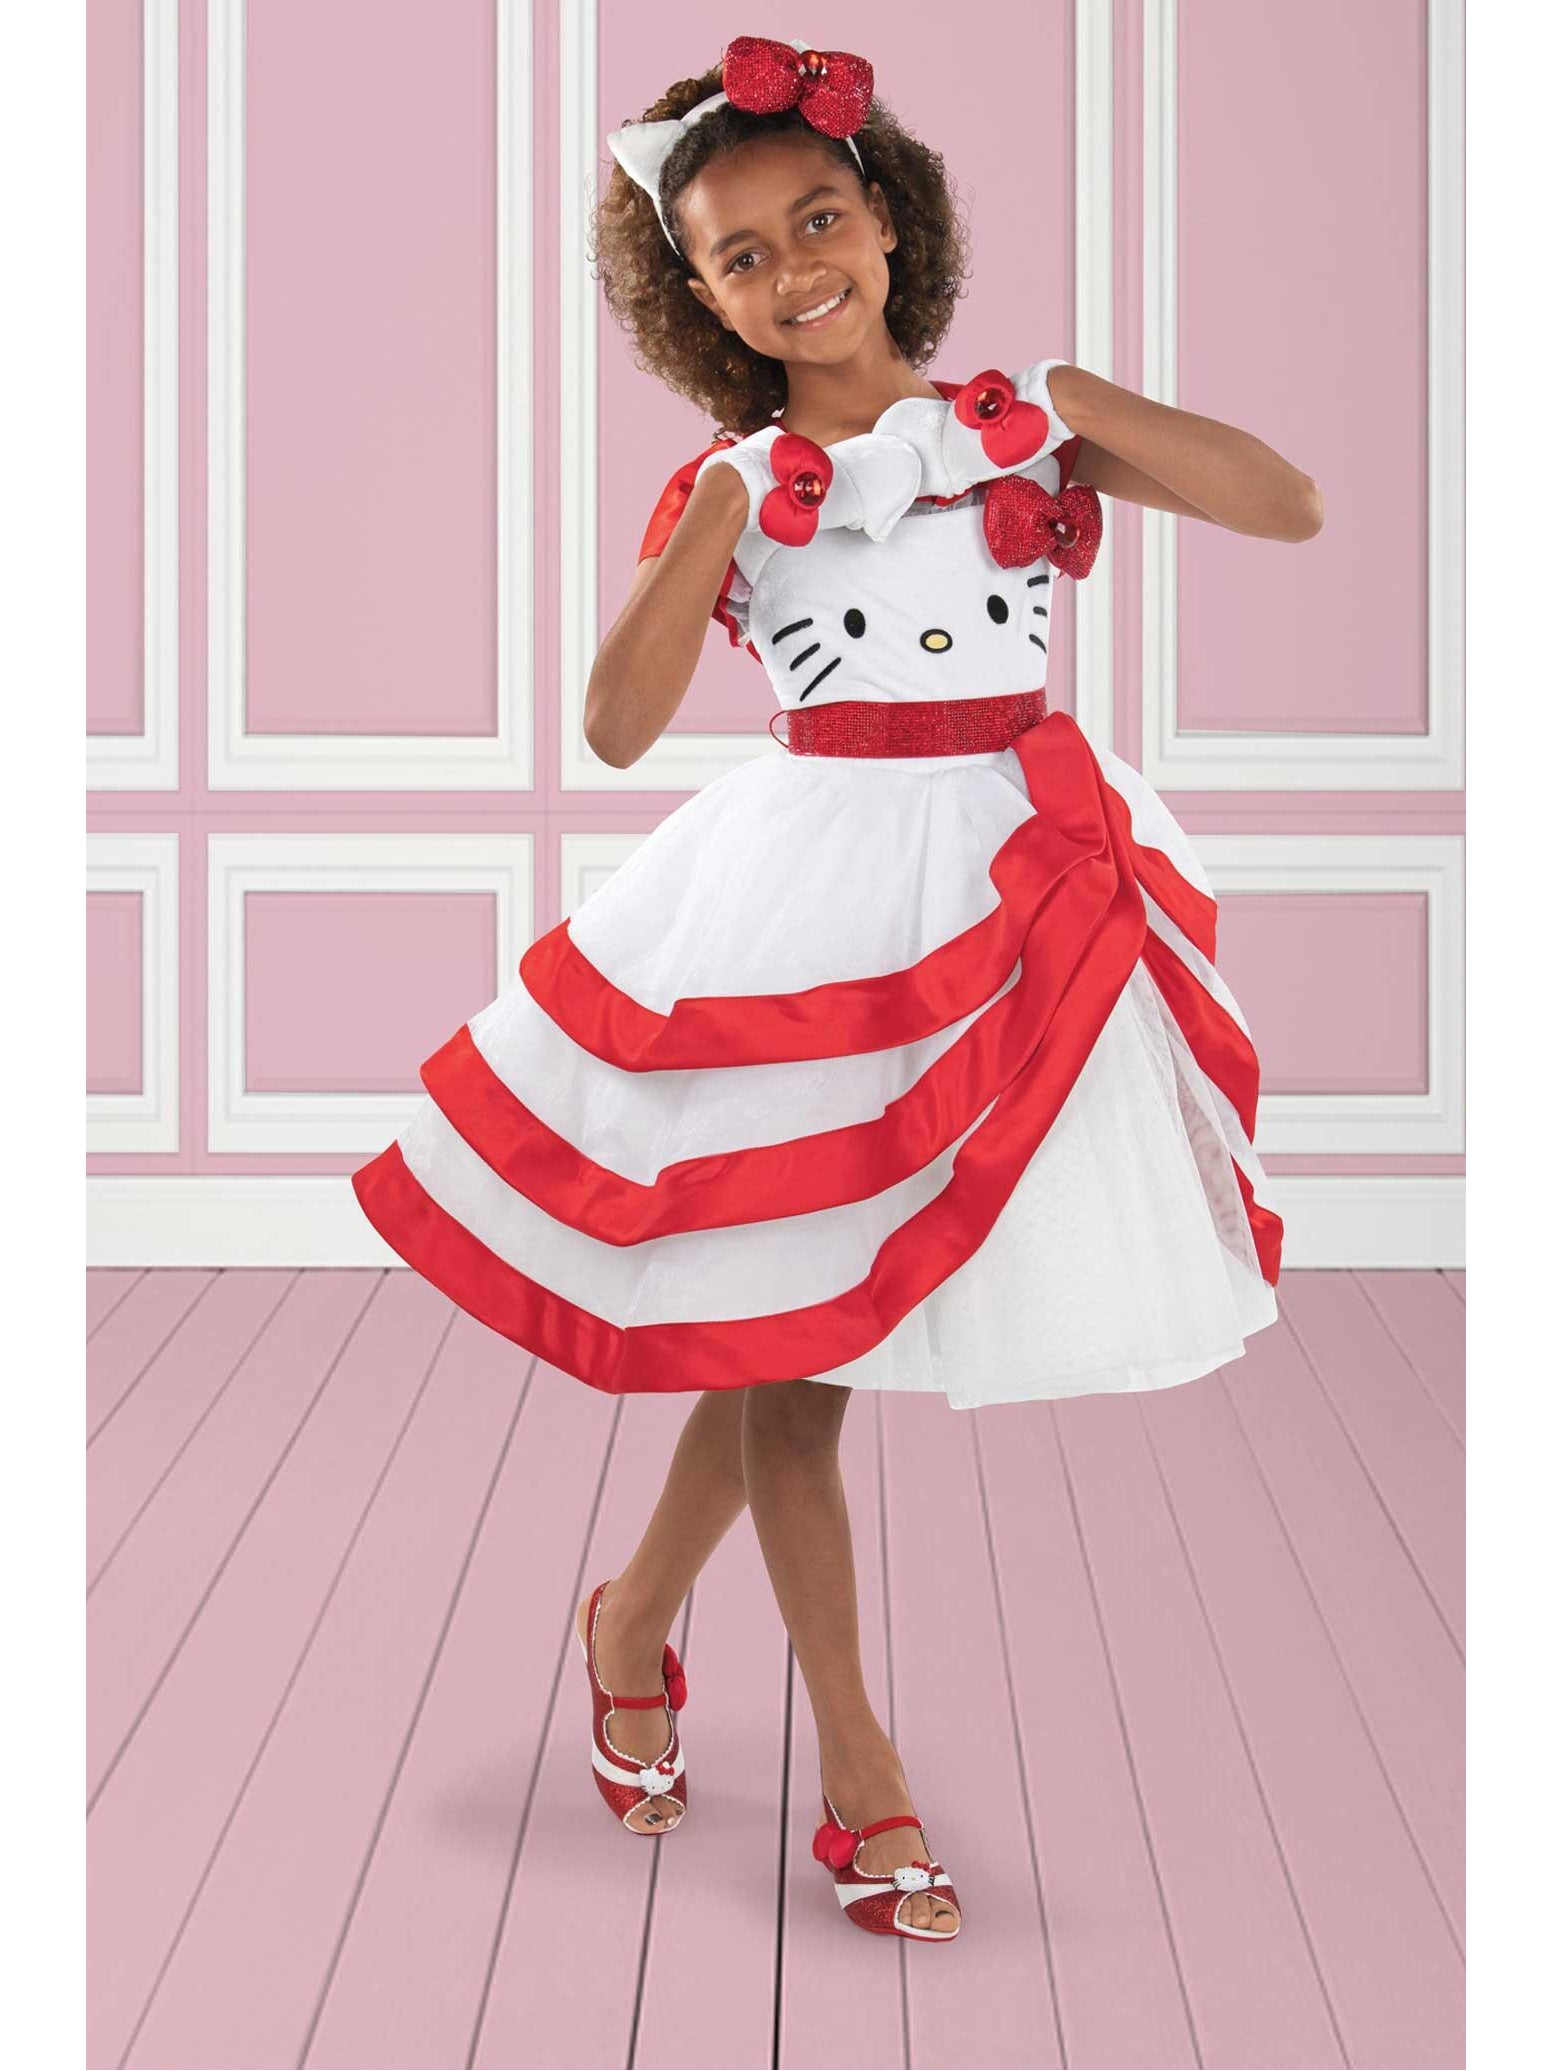 Hello Kitty Children's Clothing